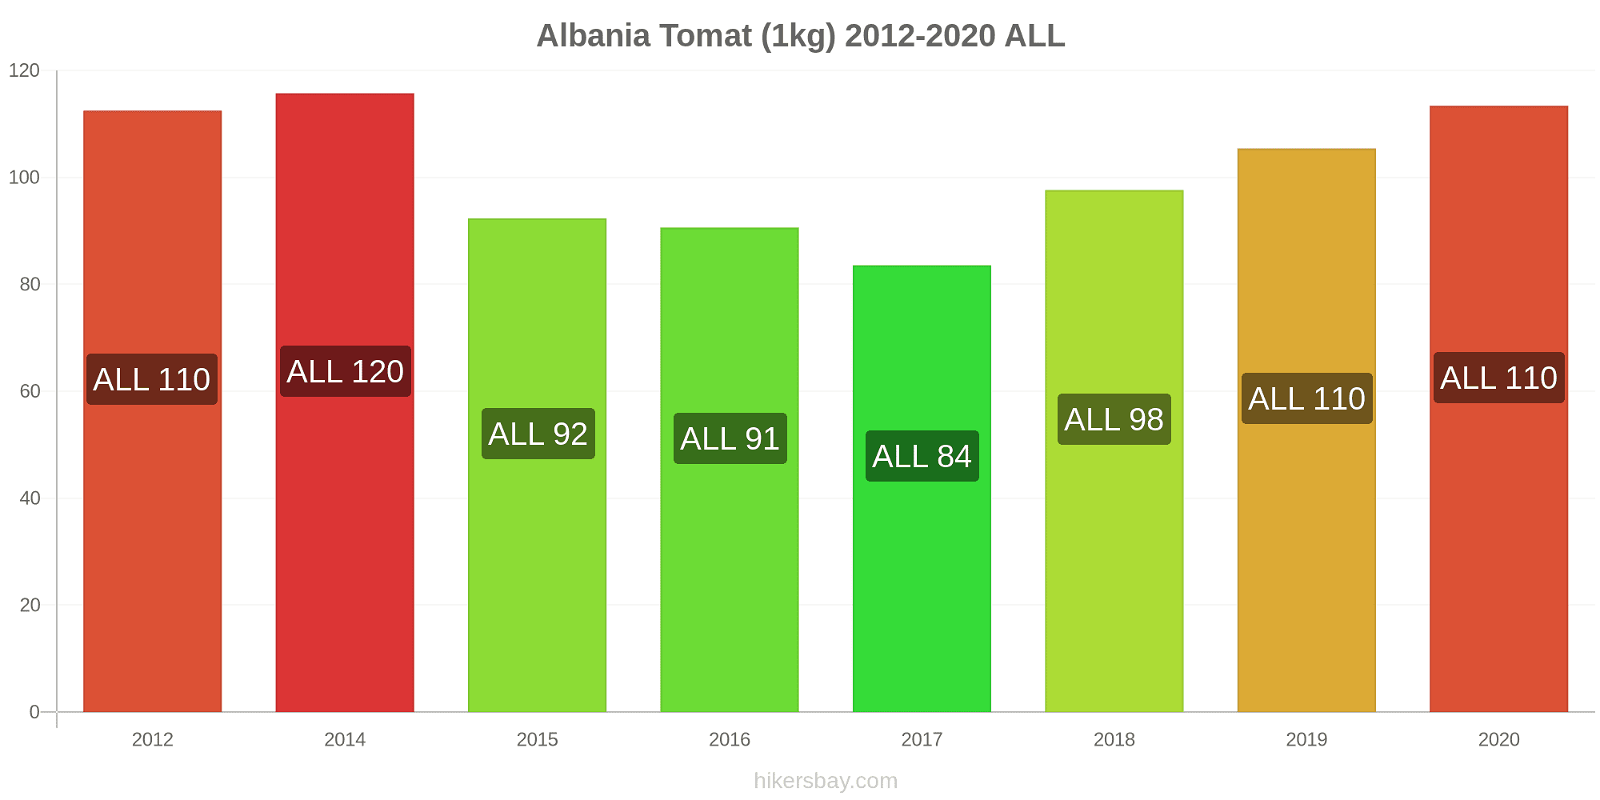 Albania prisendringer Tomat (1kg) hikersbay.com